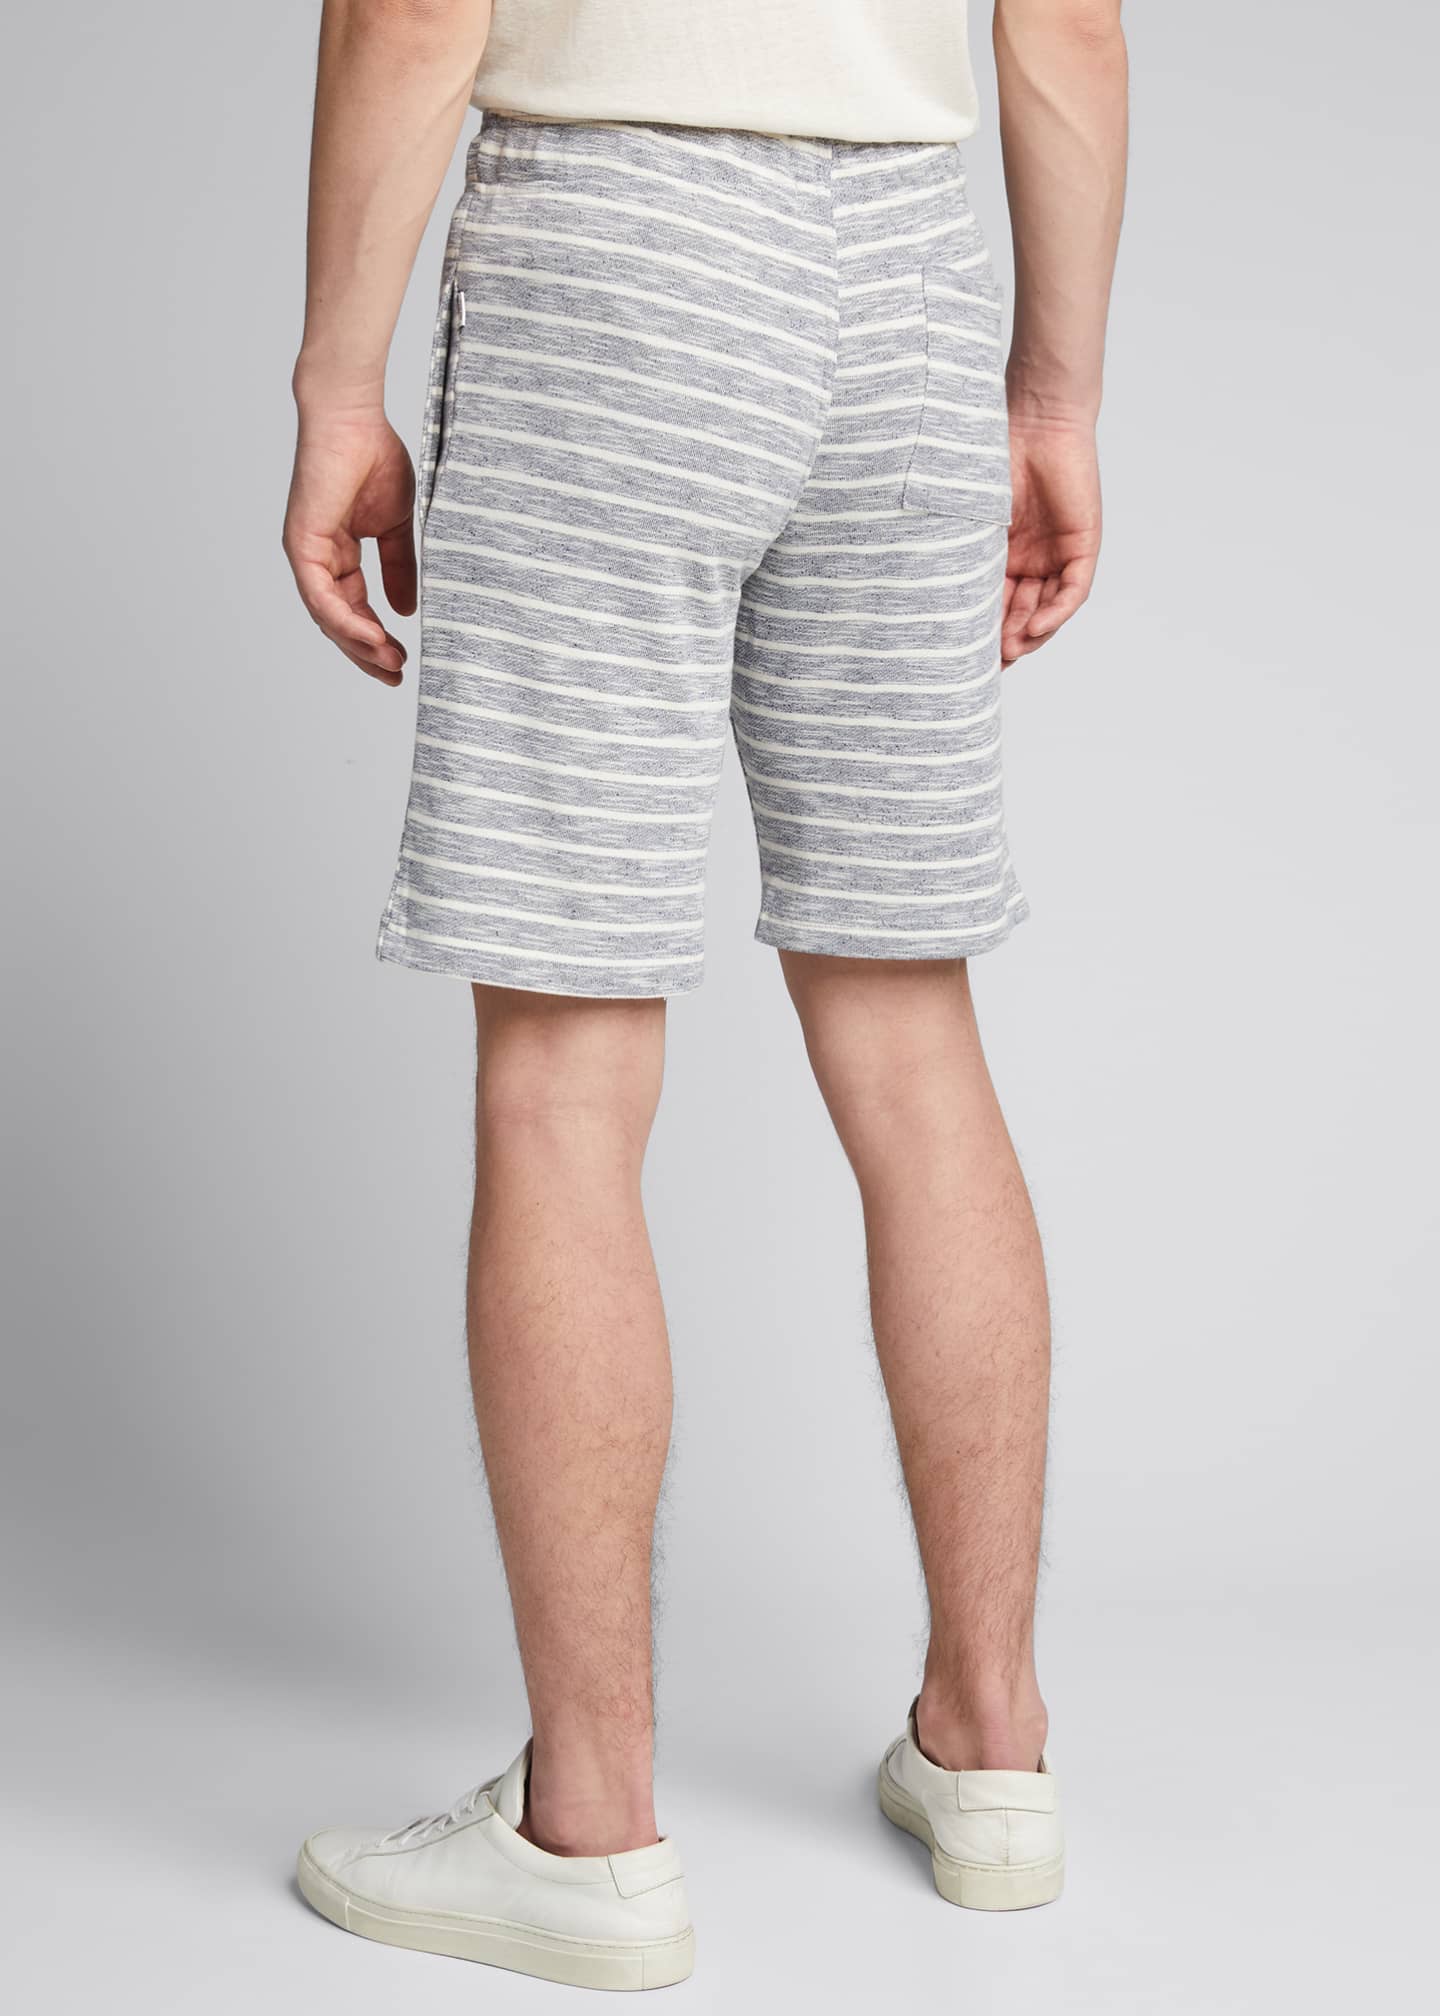 Onia Men's Saul Linen/Cotton Shorts - Bergdorf Goodman